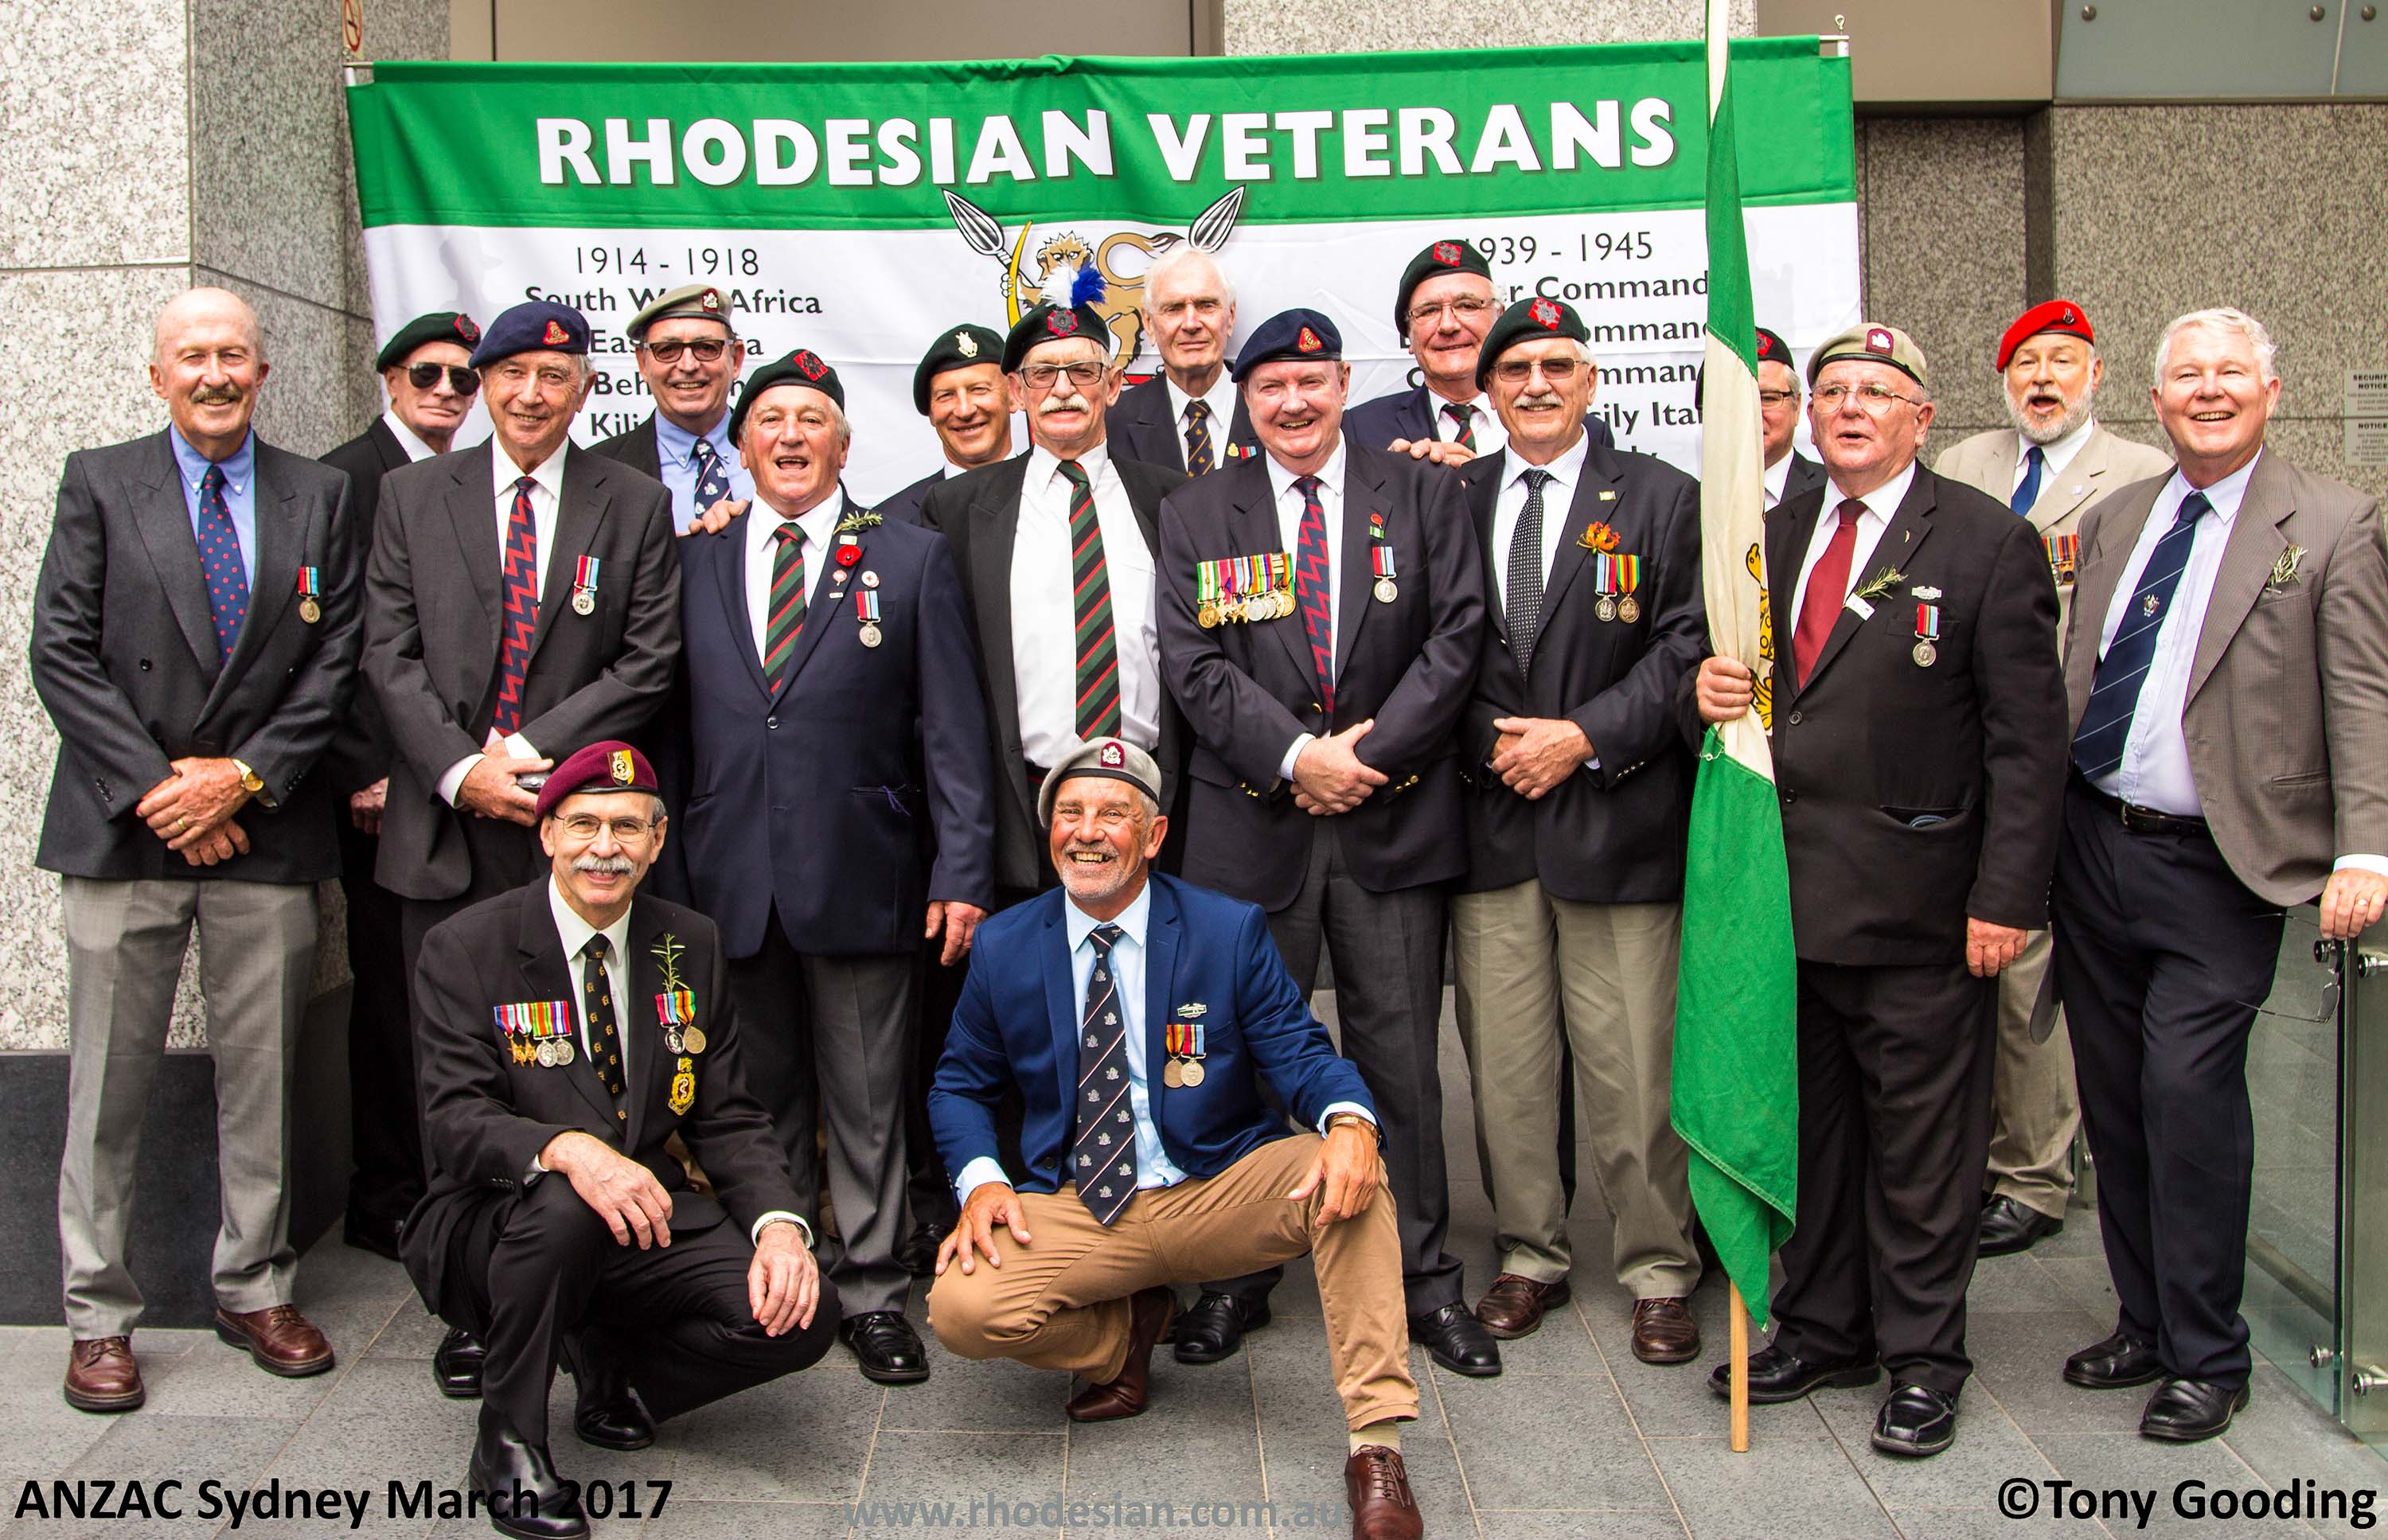 Rhodesian veterans after ANZAC Day March in Sydney in 2017